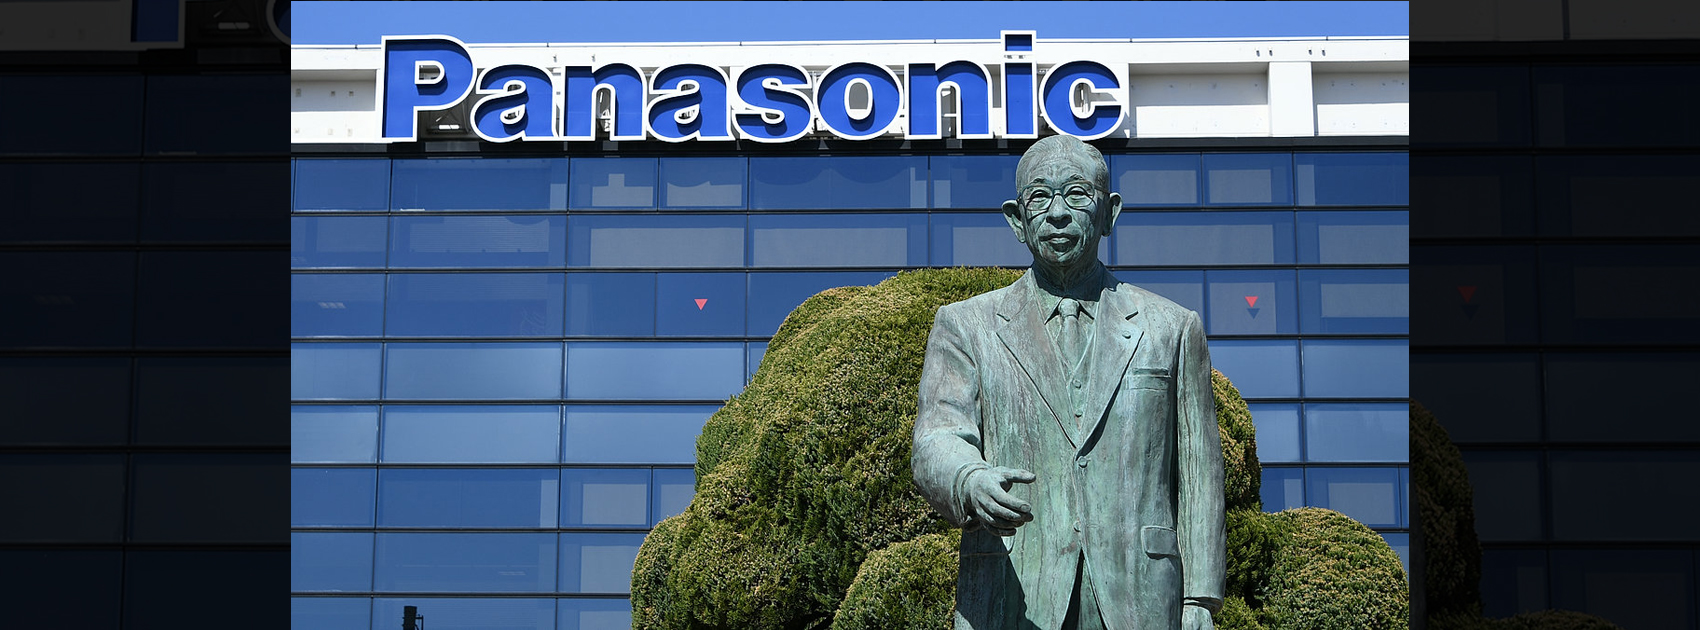 Panasonic Founding Story,Journey of Konosuke Matsushita,Startup Stories,Real Life Inspirational Stories,History of Panasonic,Panasonic Success Story,Panasonic Founder Story,Konosuke Matsushita Story,Panasonic Latest News